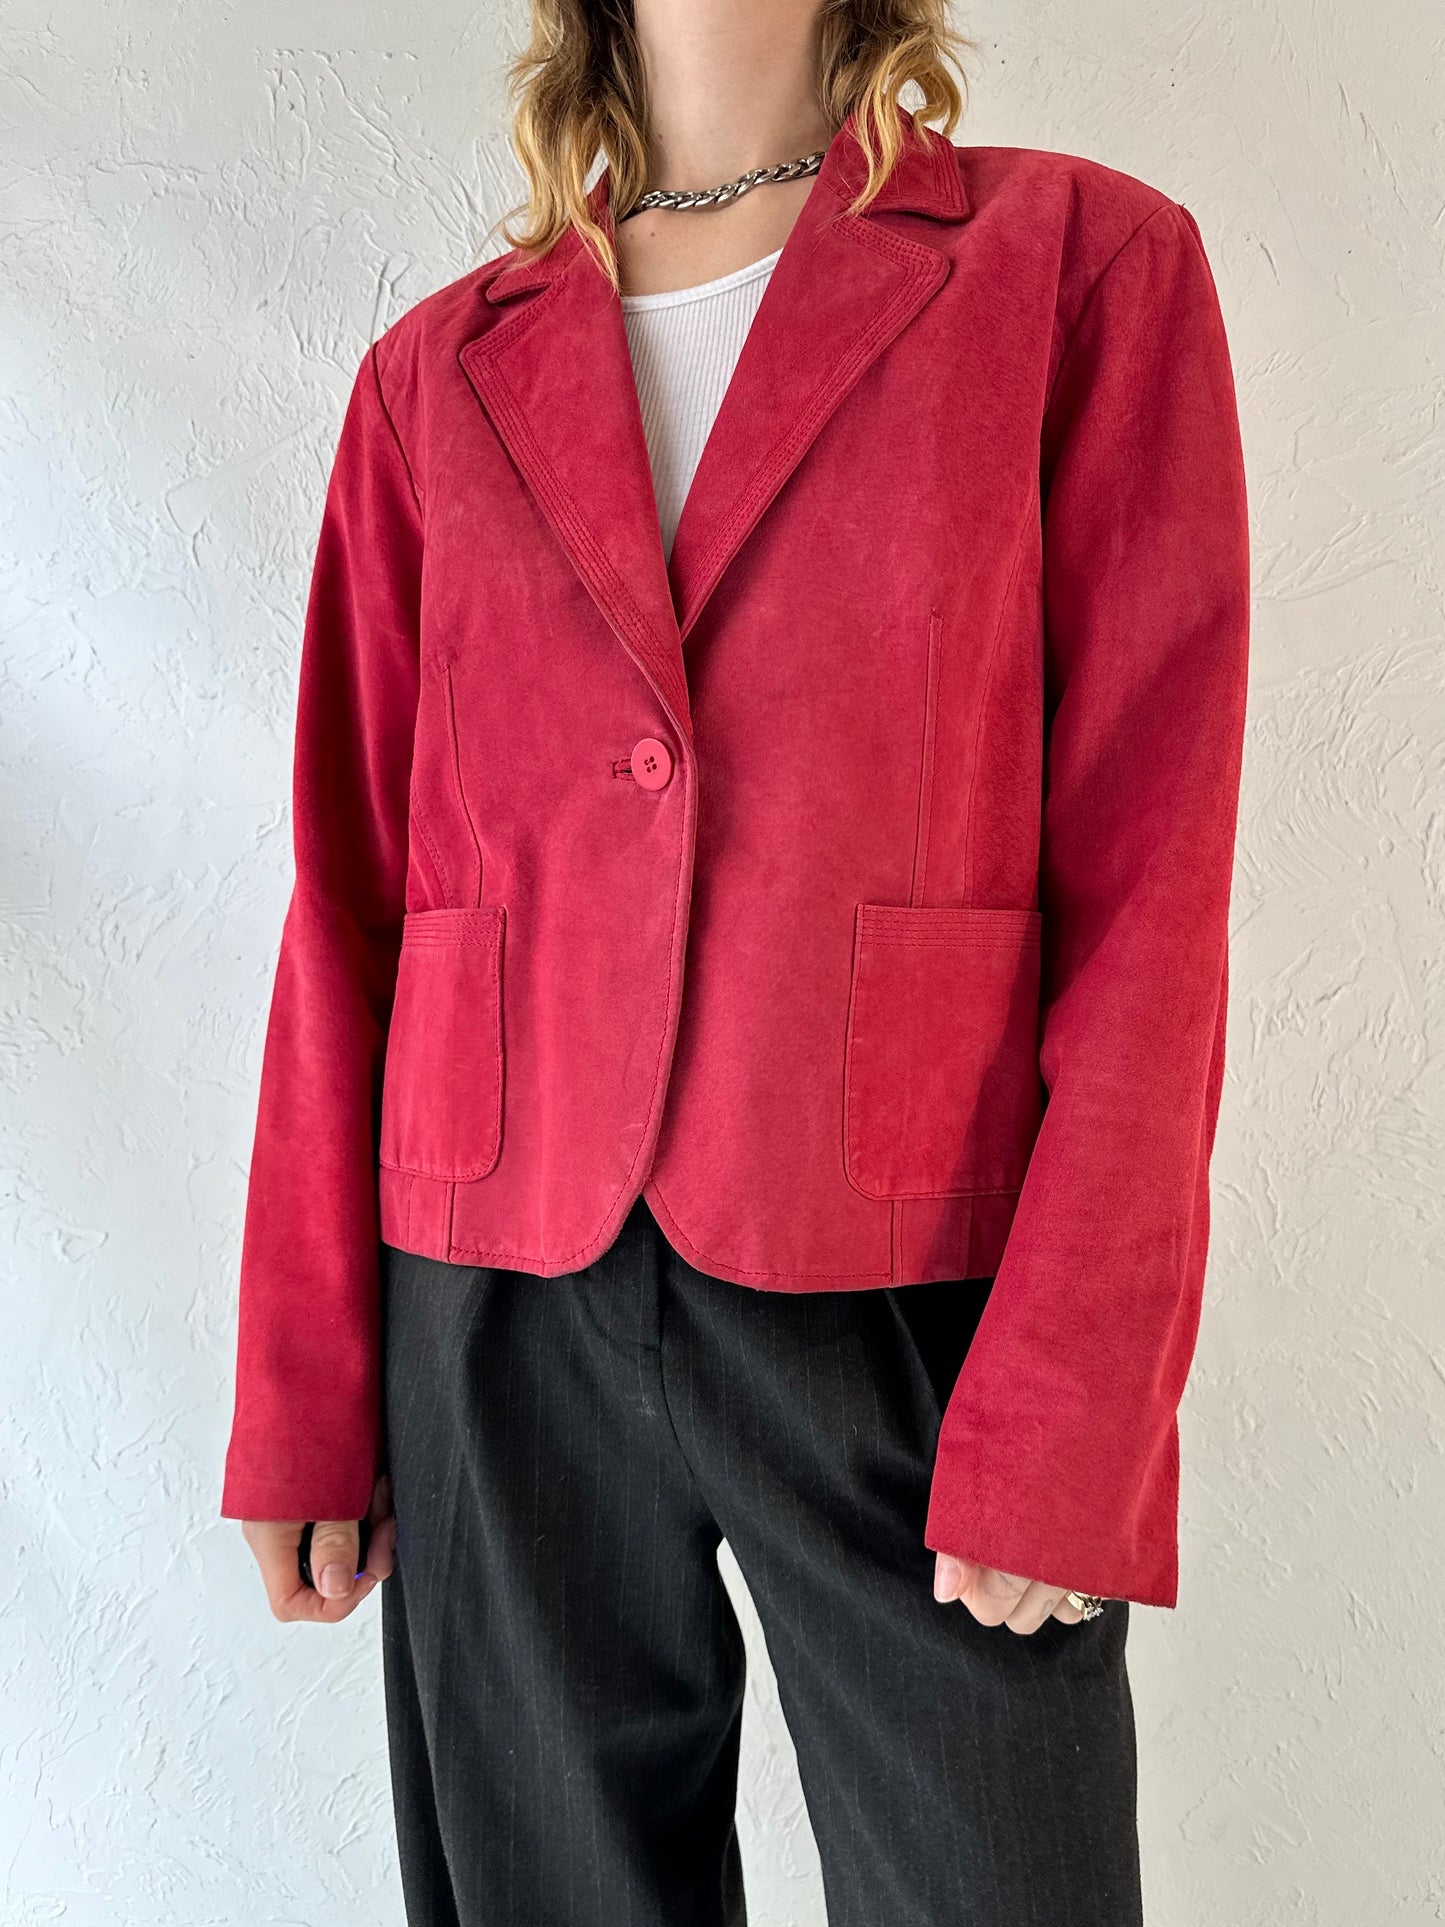 Y2k 'Alfani' Red Suede Jacket / Large